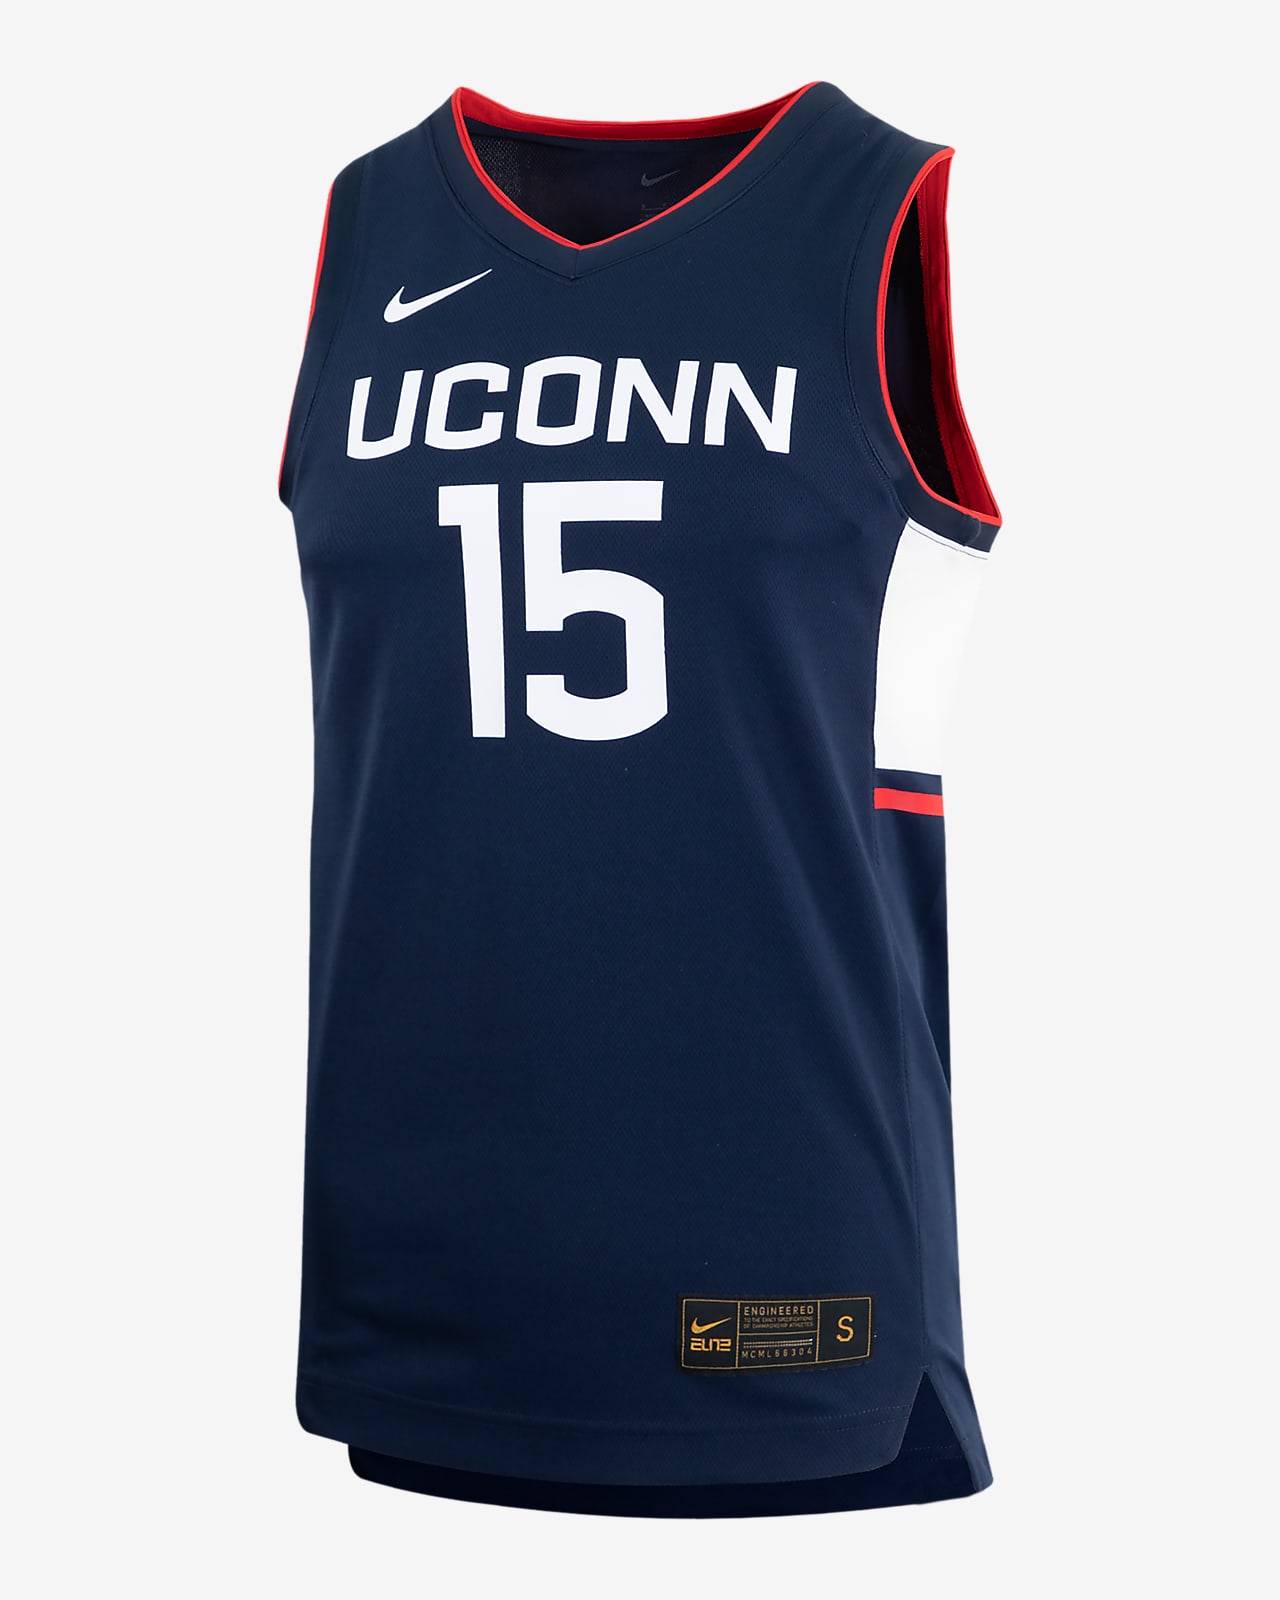 UConn Men's Nike College Basketball Jersey